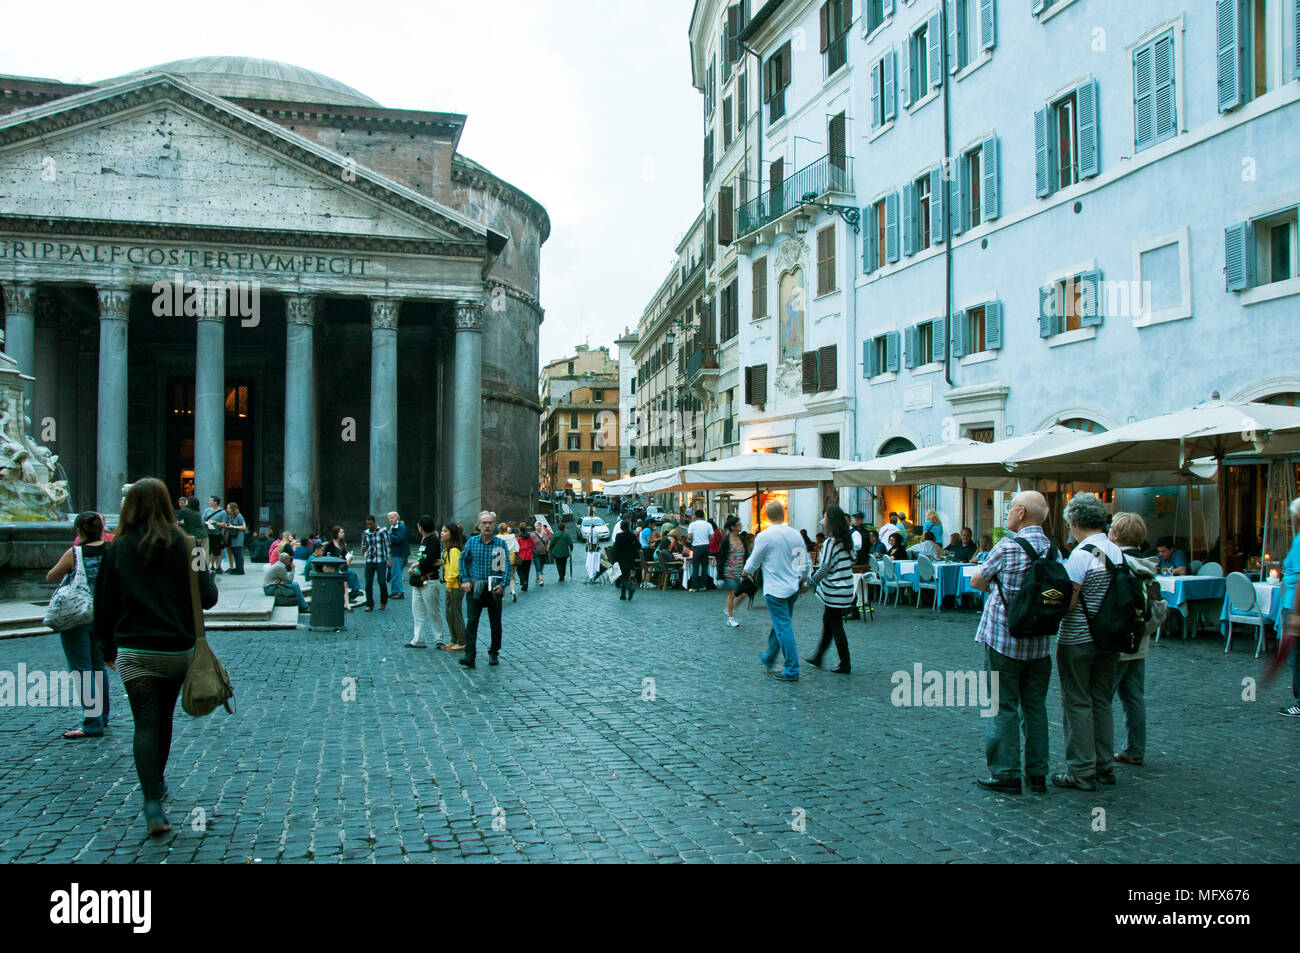 Piazza della Rotonda with the Pantheon. Rome, Italy Stock Photo